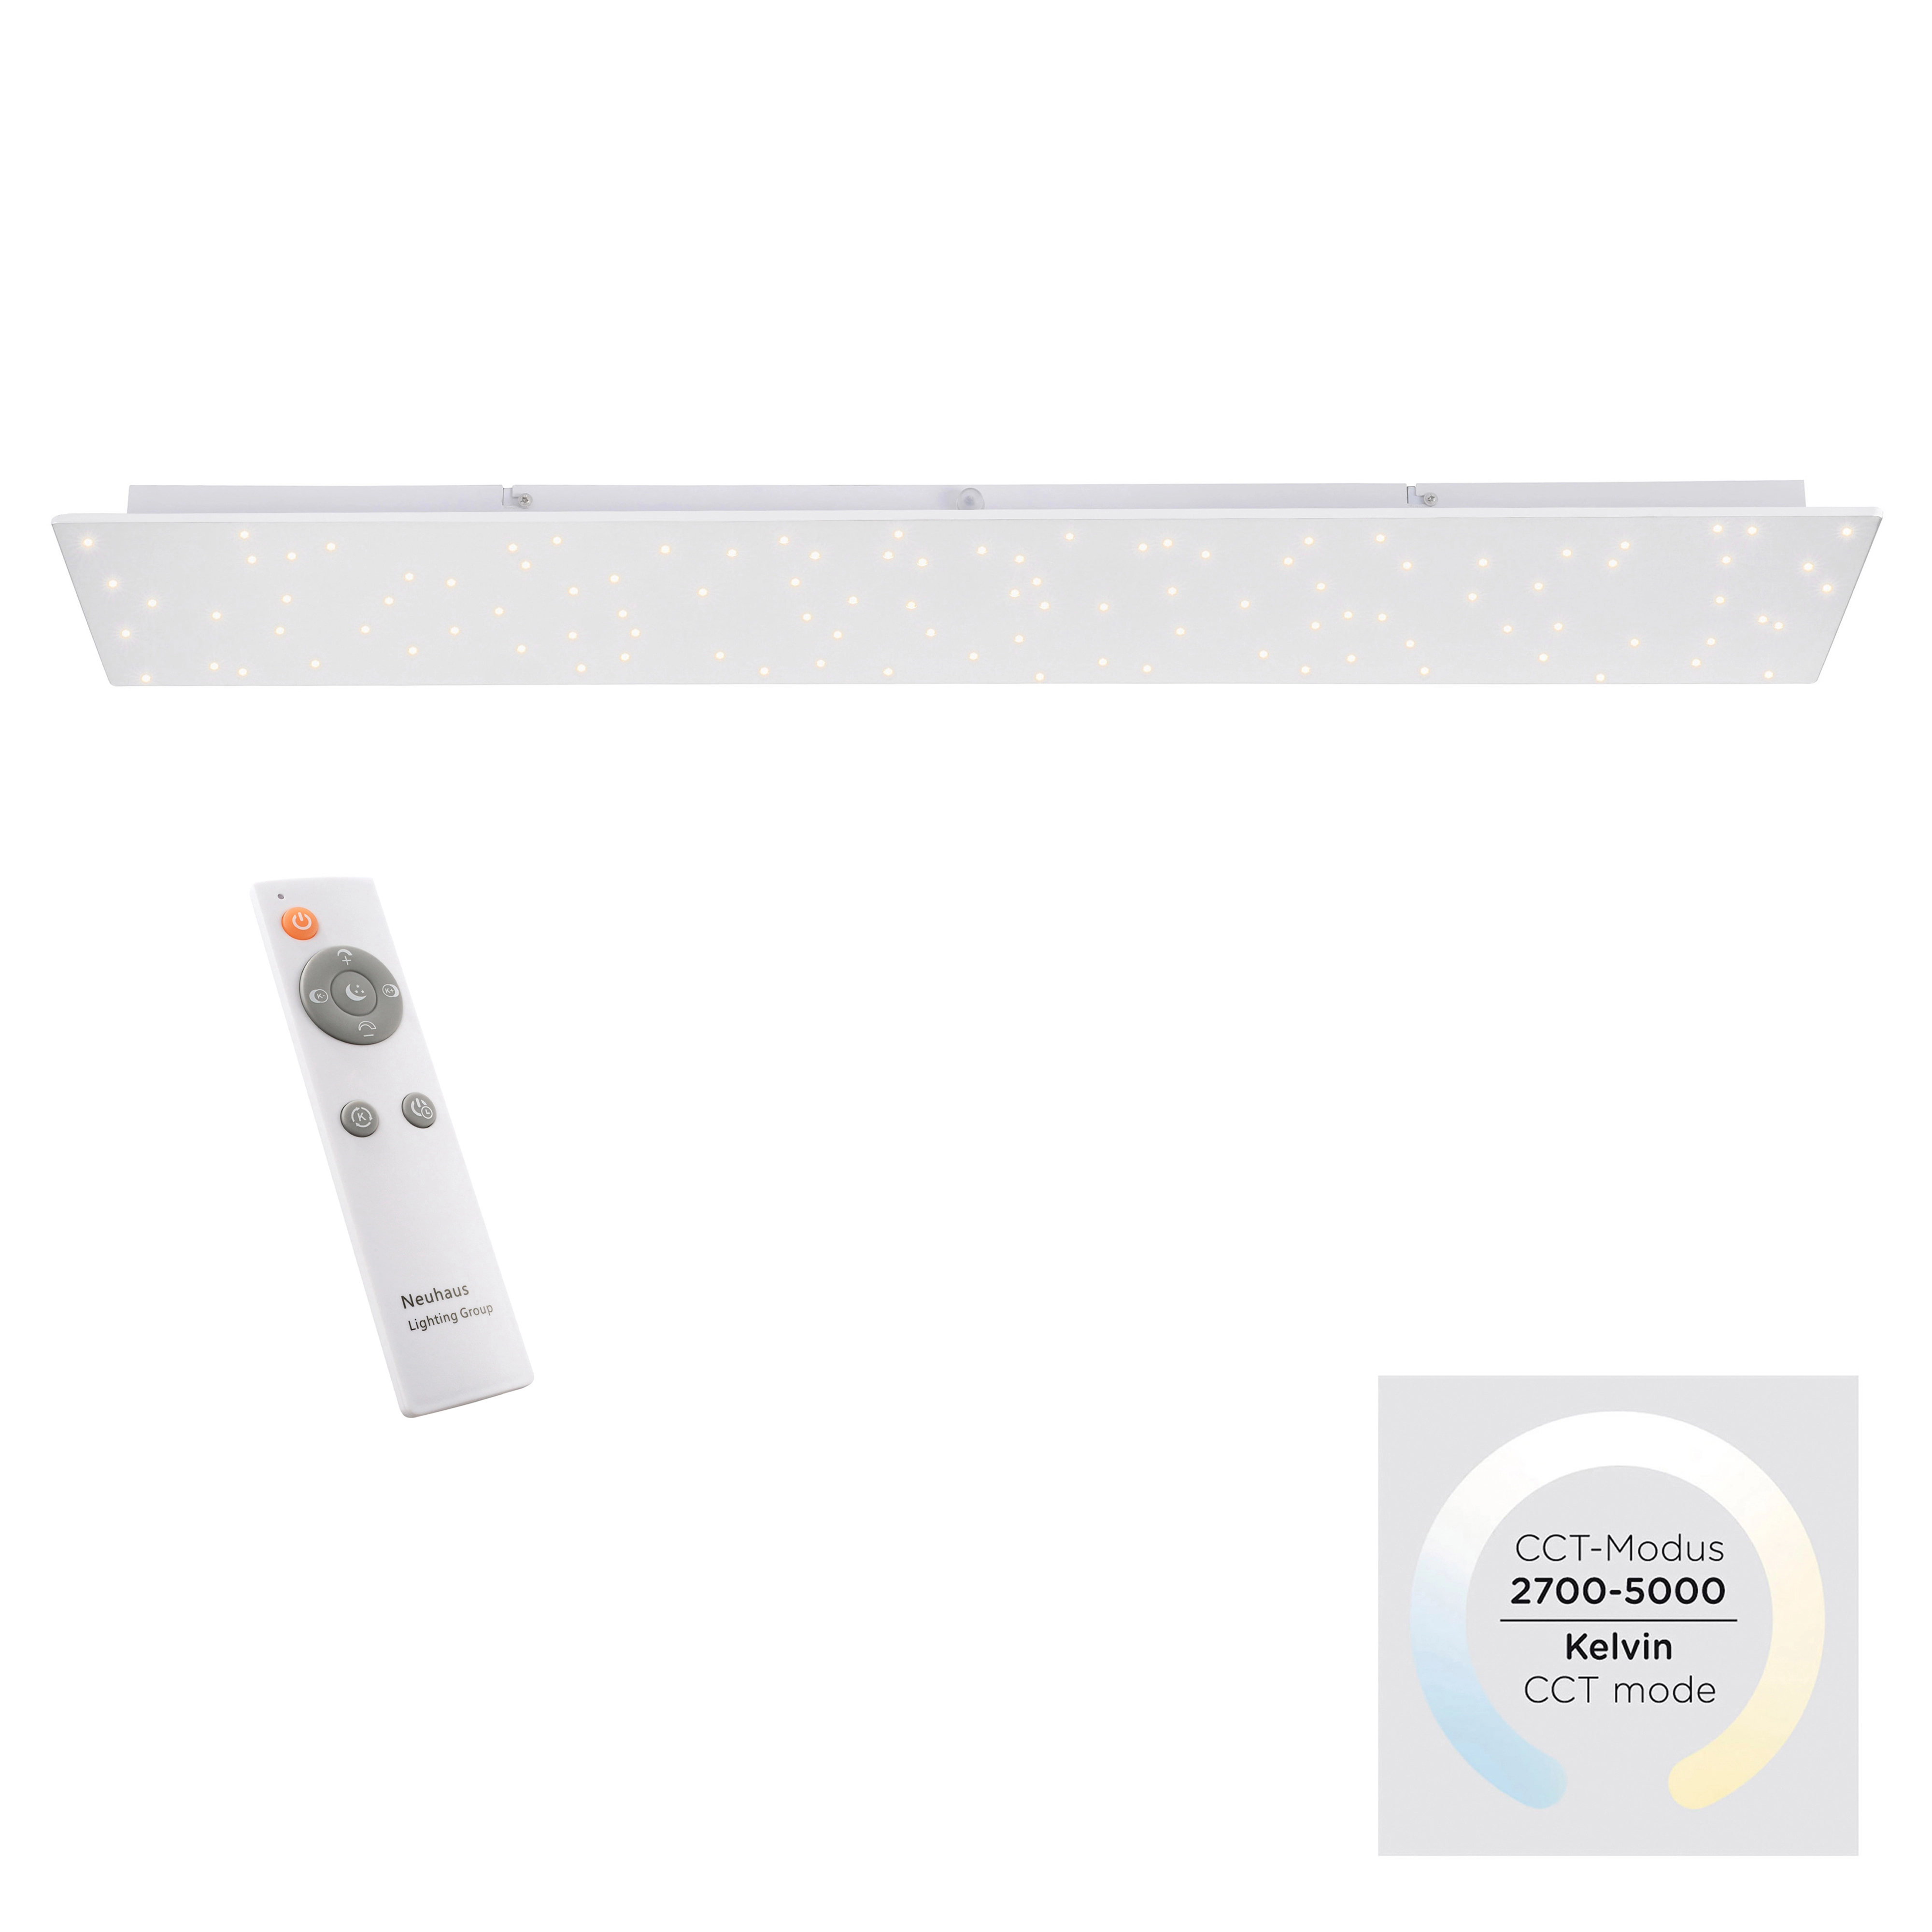 Just Light. LED-Panel ultraflach Ø 40 cm Weiß kaufen bei OBI